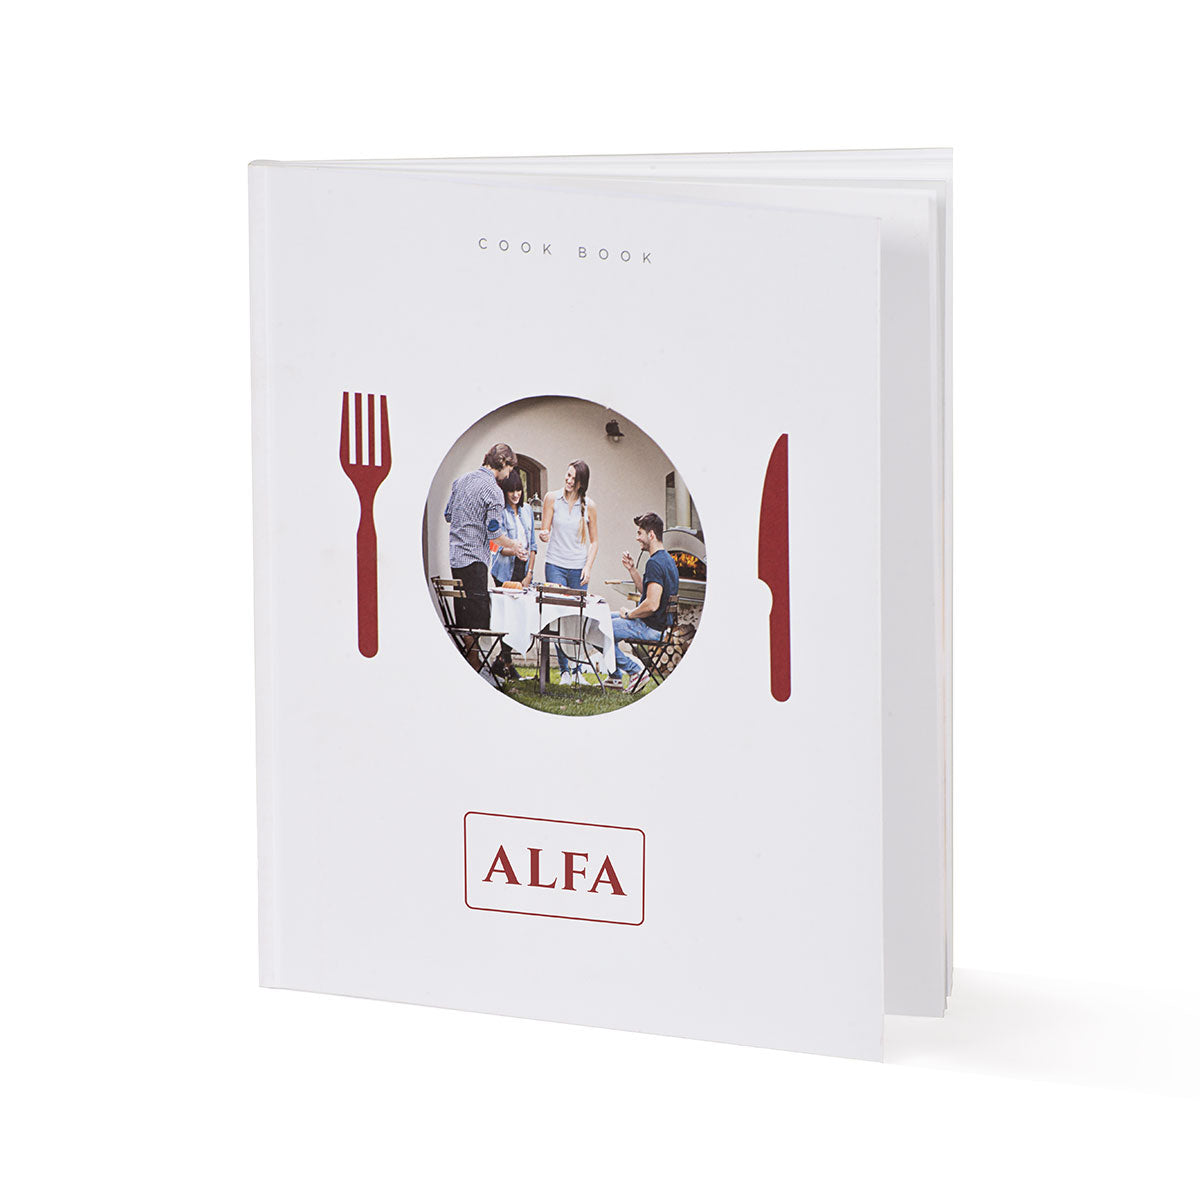 Alfa Cooking Book